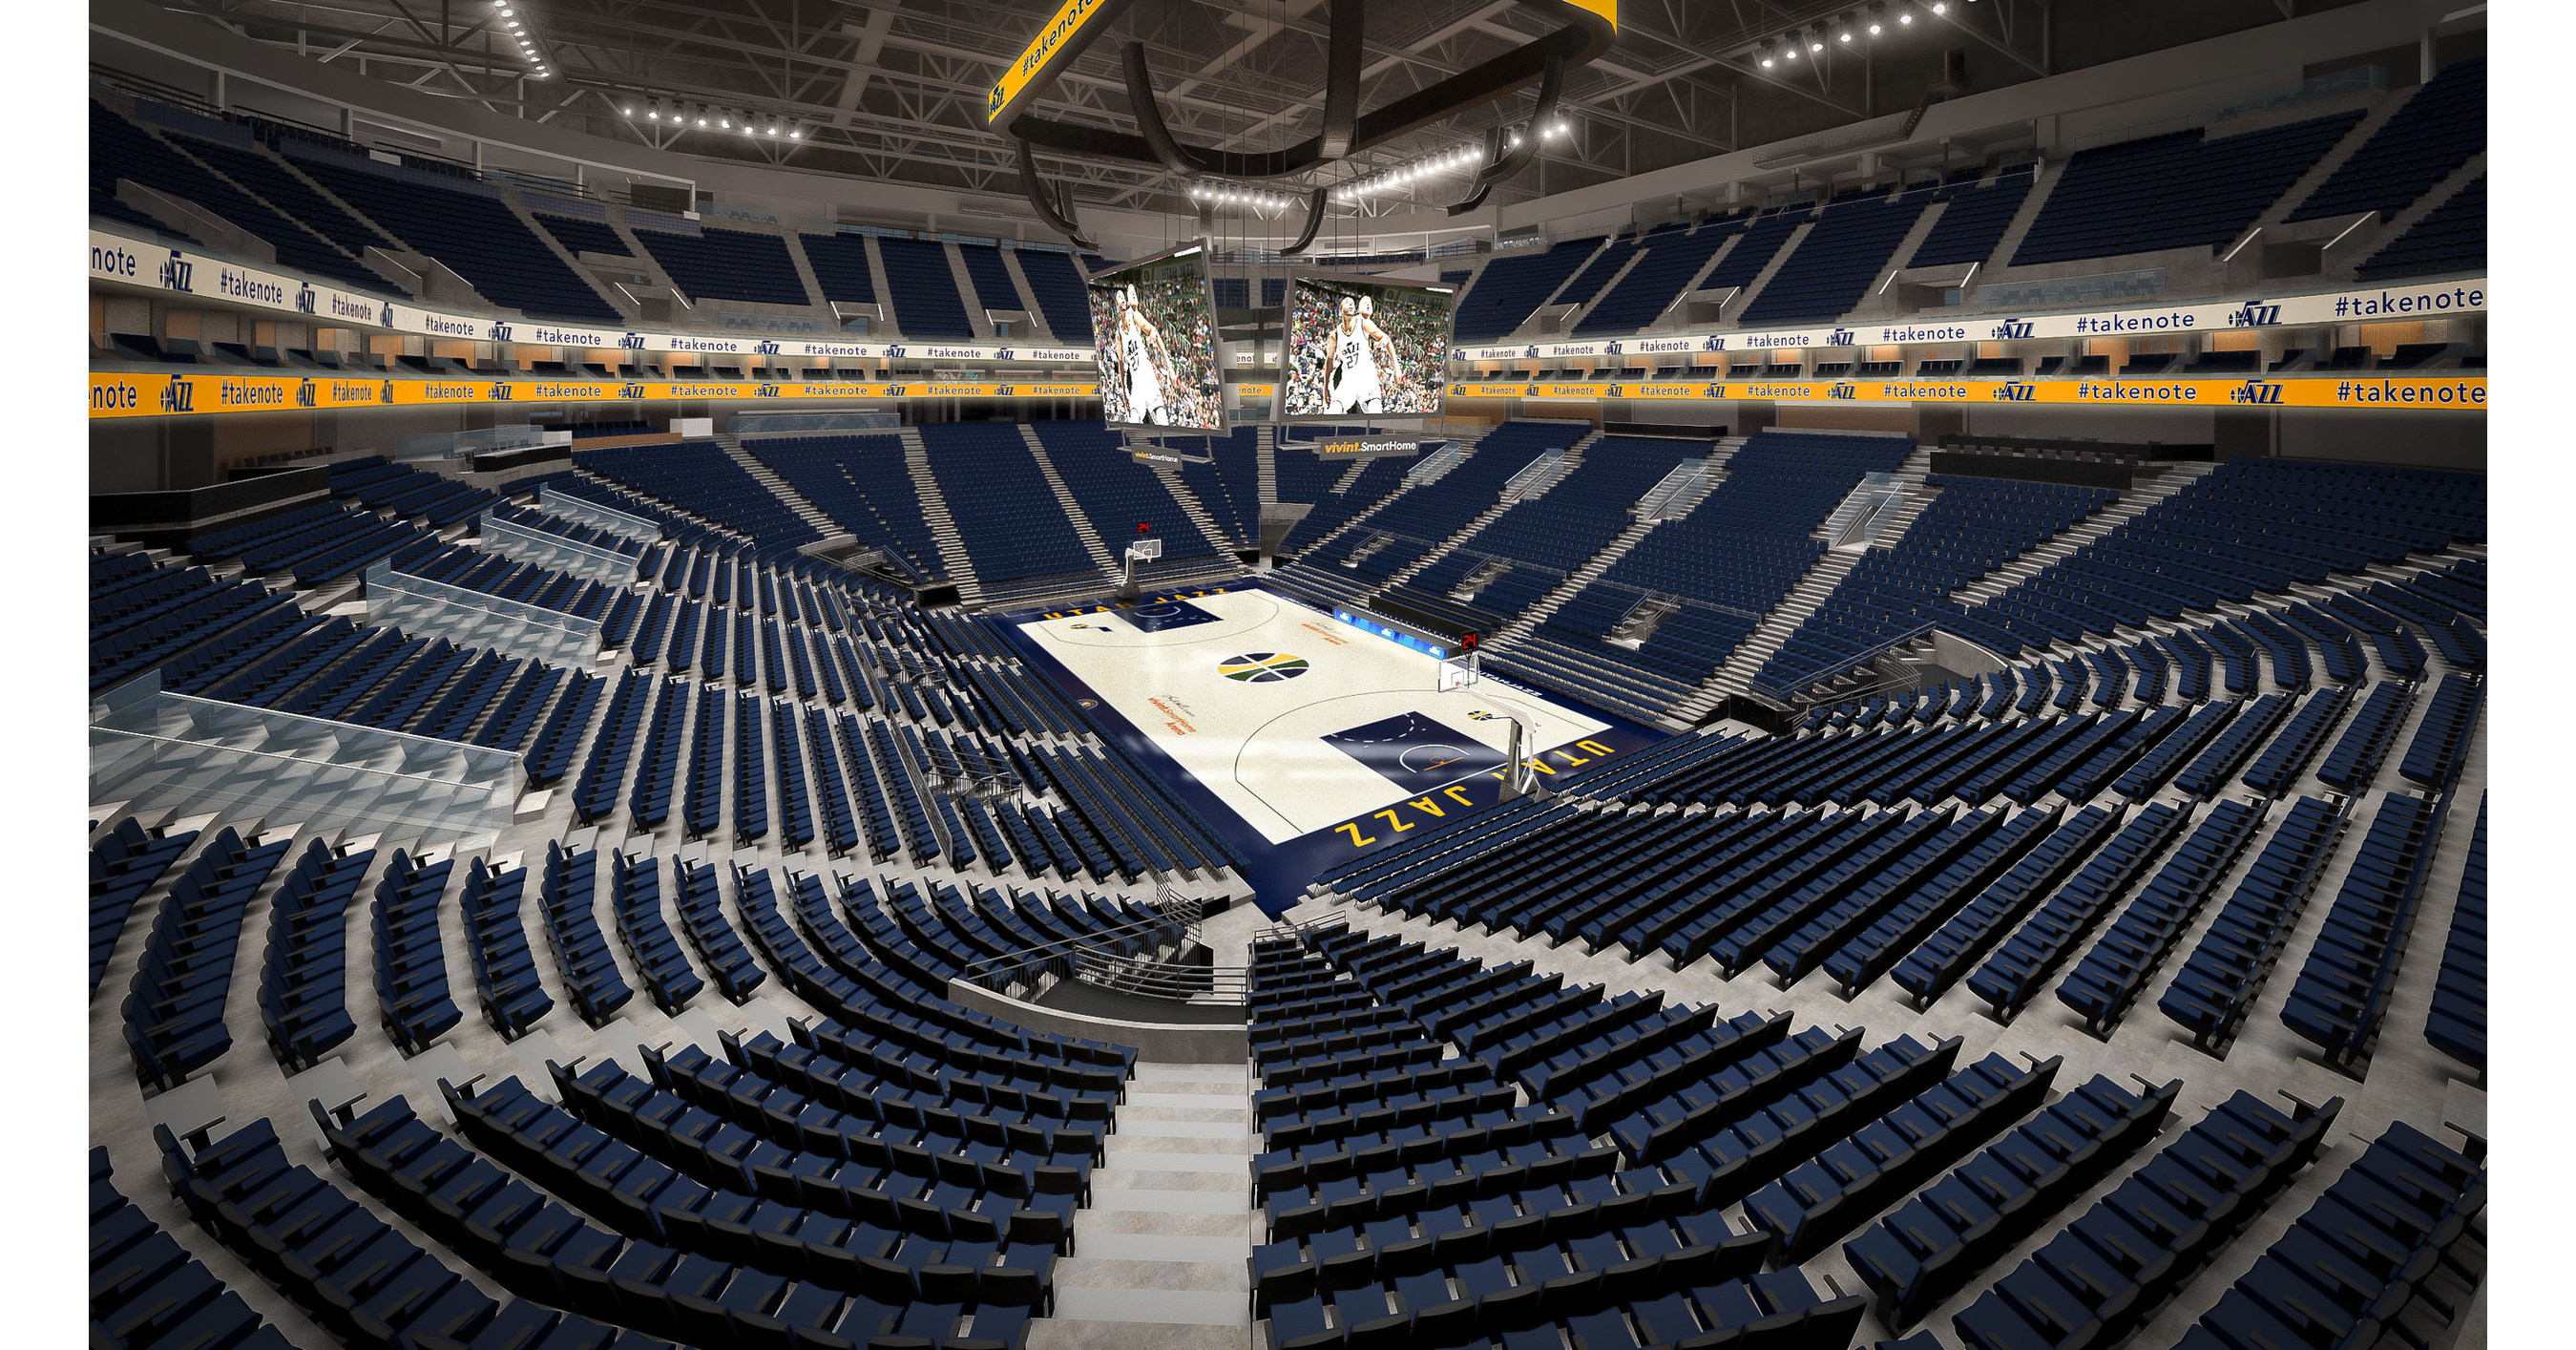 Utah Jazz, Vivint Smart Home Arena - Anthony James Partners (AJP)